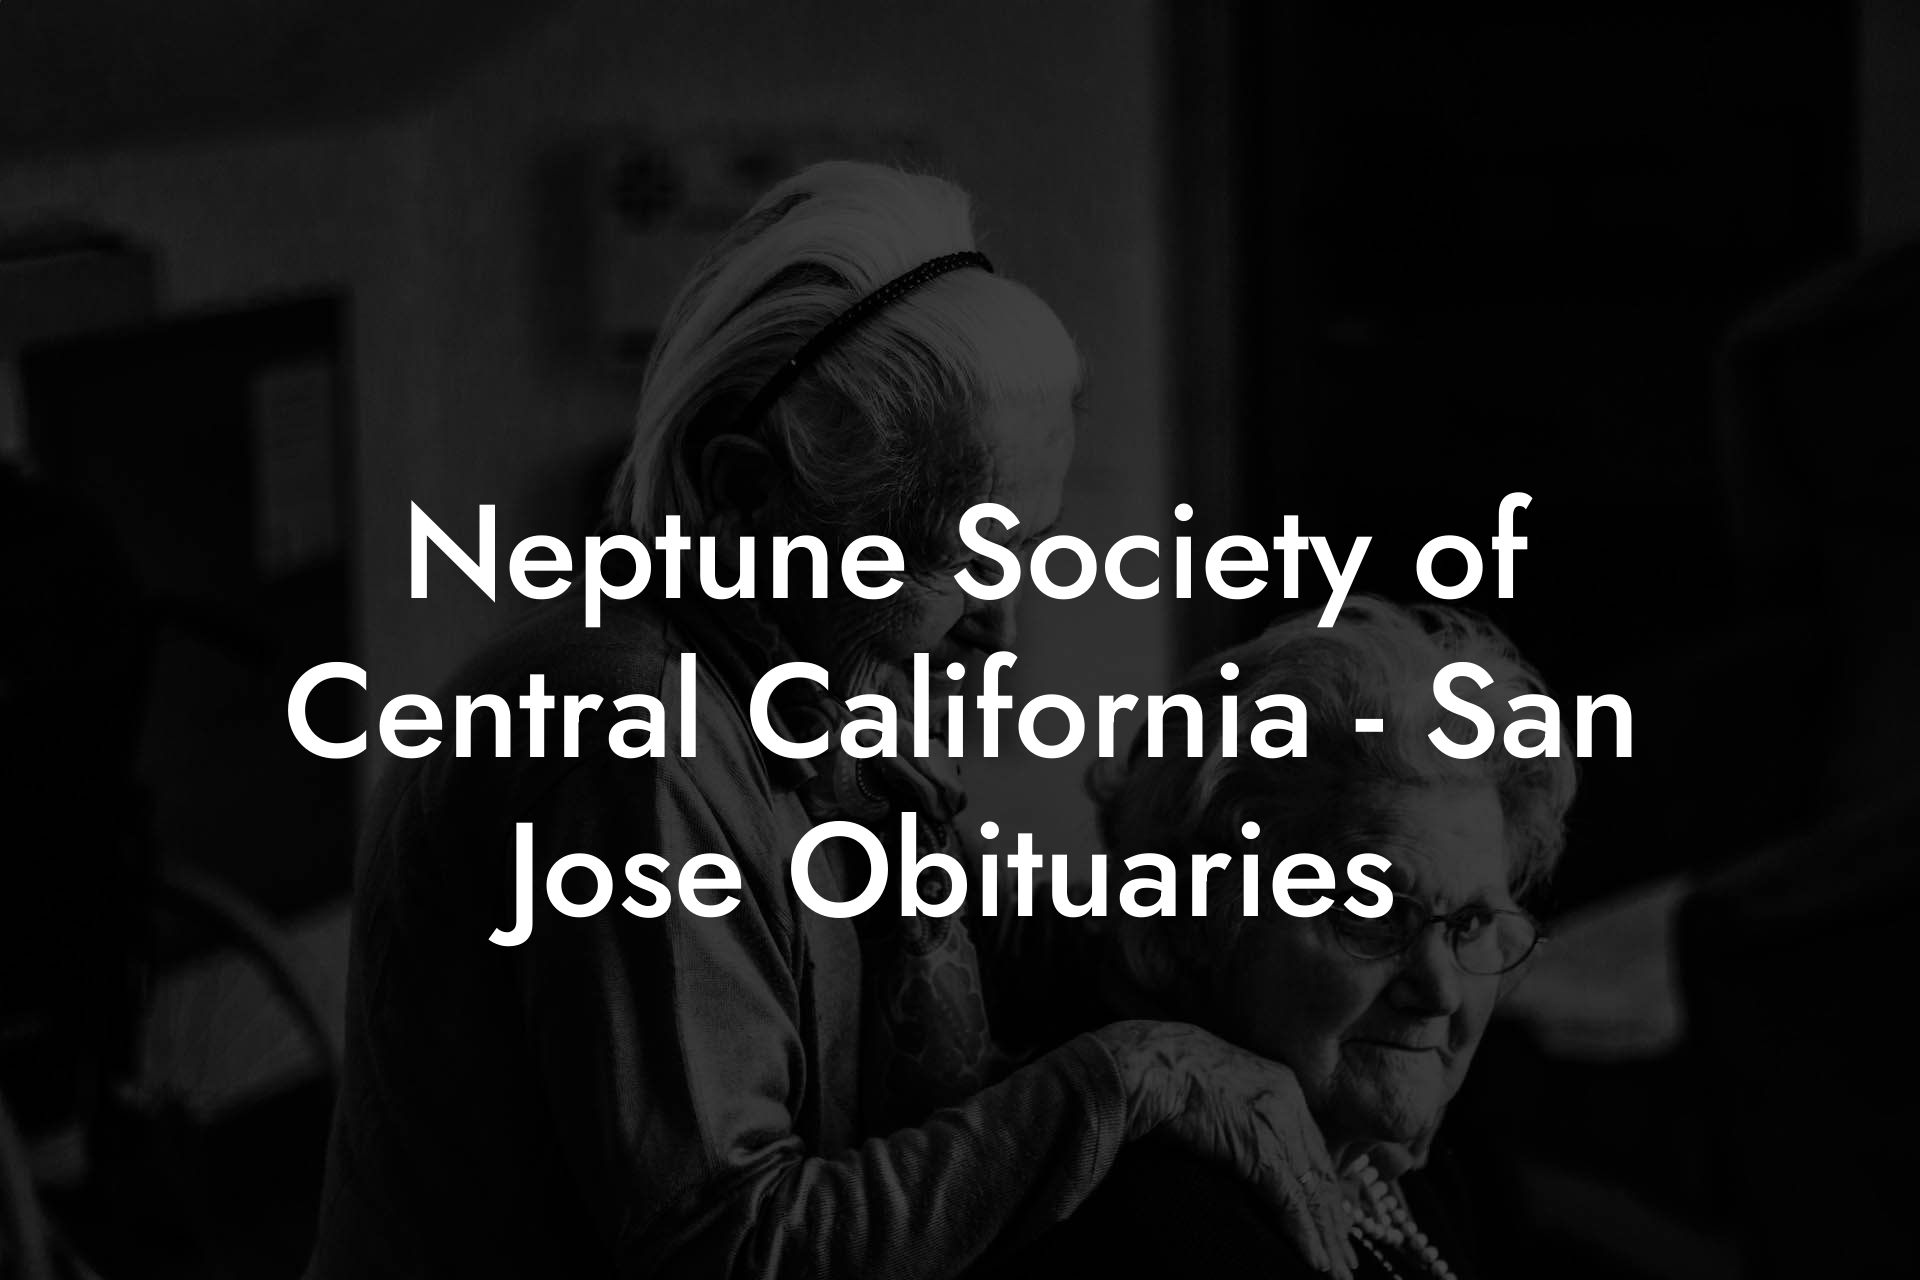 Neptune Society of Central California - San Jose Obituaries